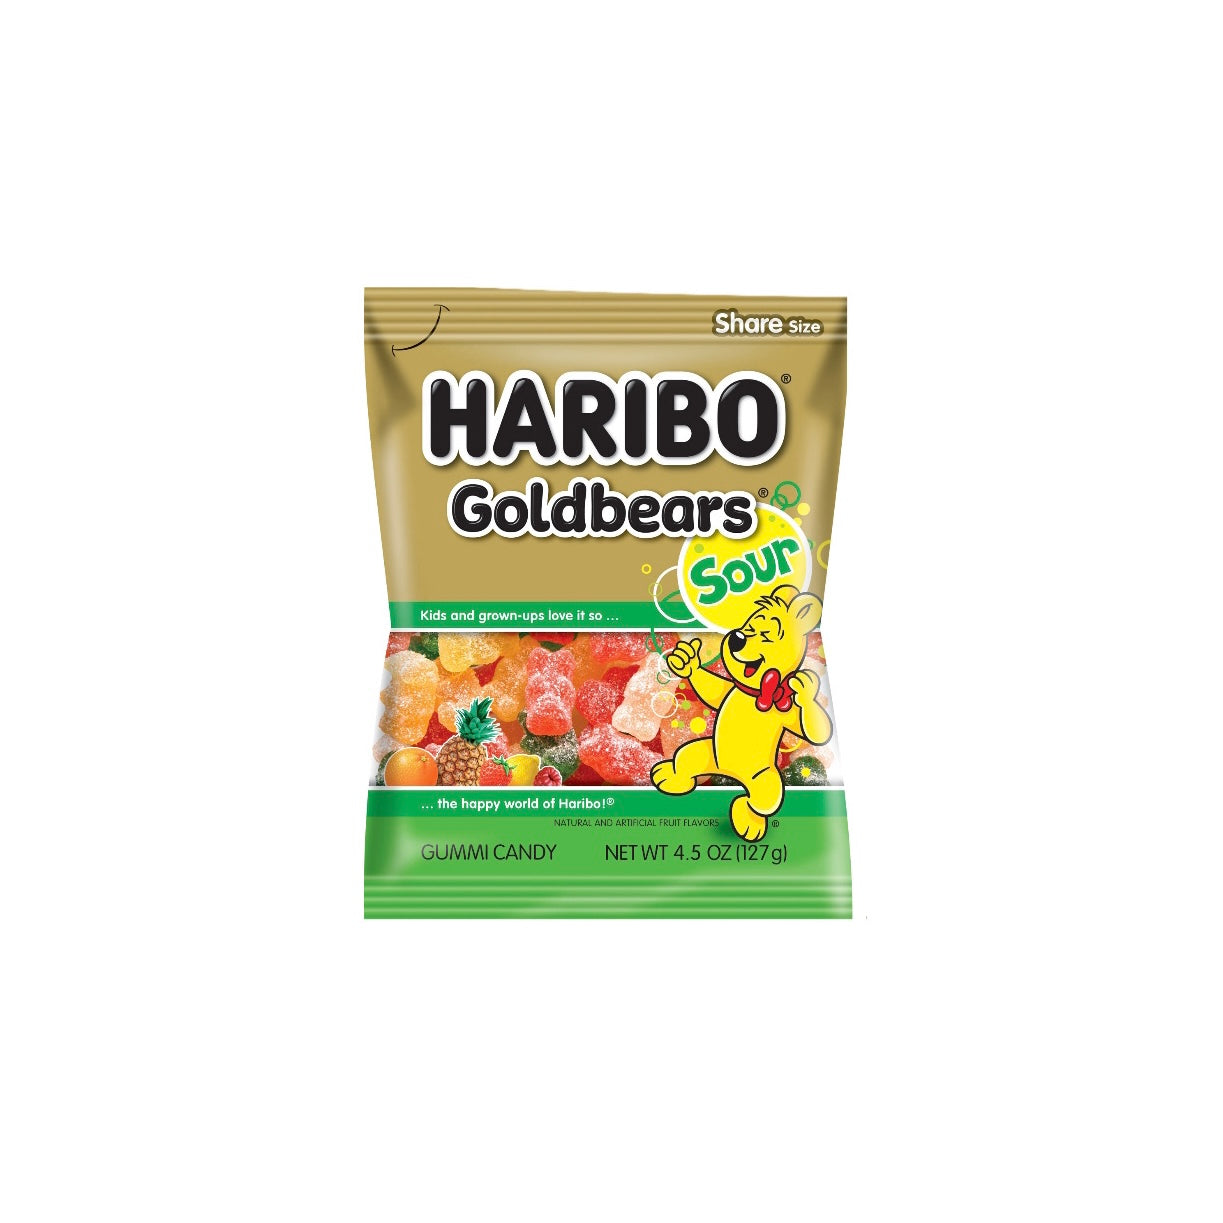 Haribo® Sour Gold-Bears Candy, 7 oz - Ralphs